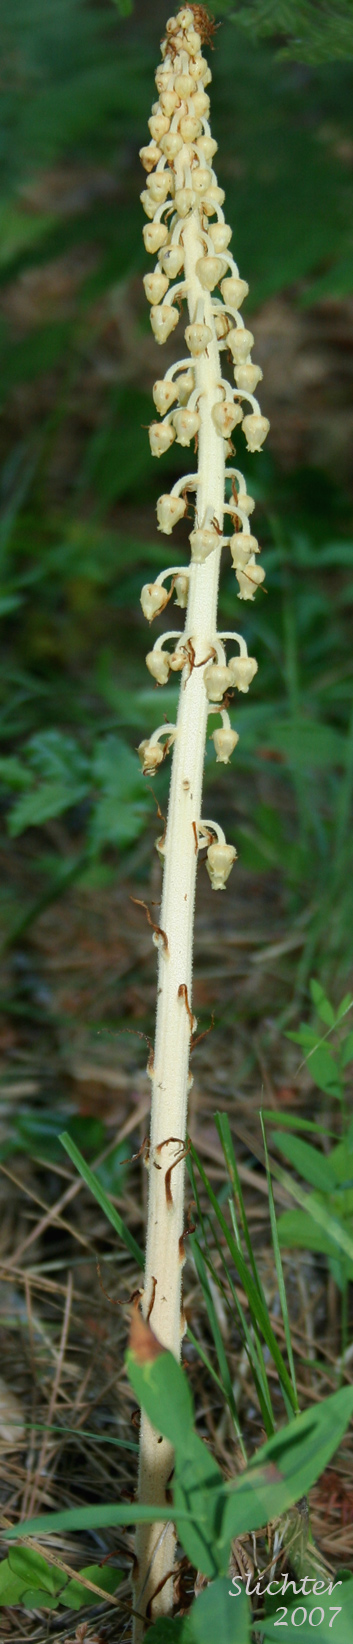 Pinedrops, Woodland Pinedrops: Pterospora andromedea